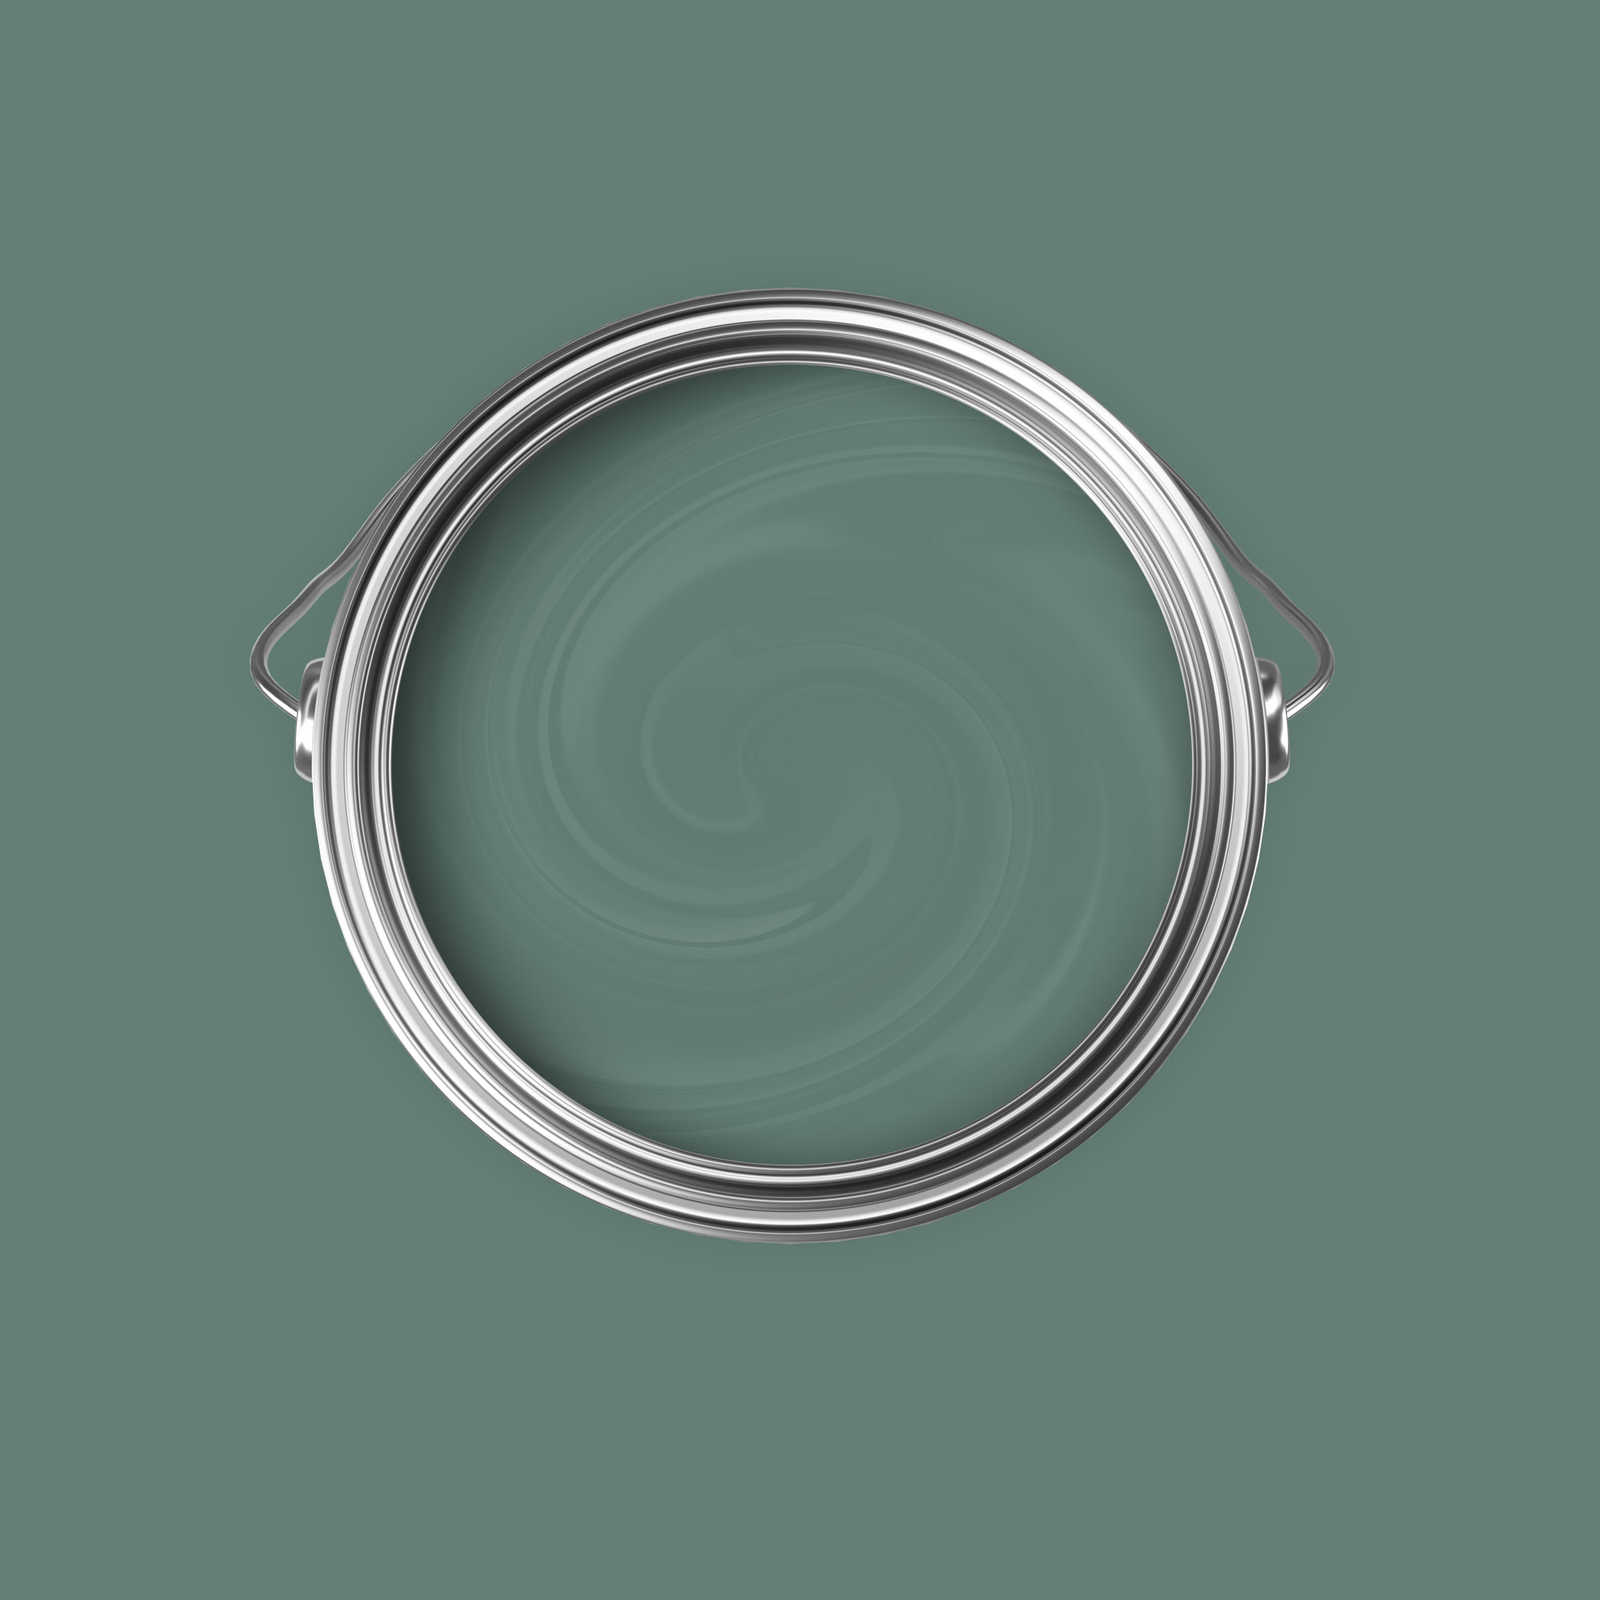             Premium Wall Paint Calm Eucalyptus »Expressive Emerald« NW410 – 5 litre
        